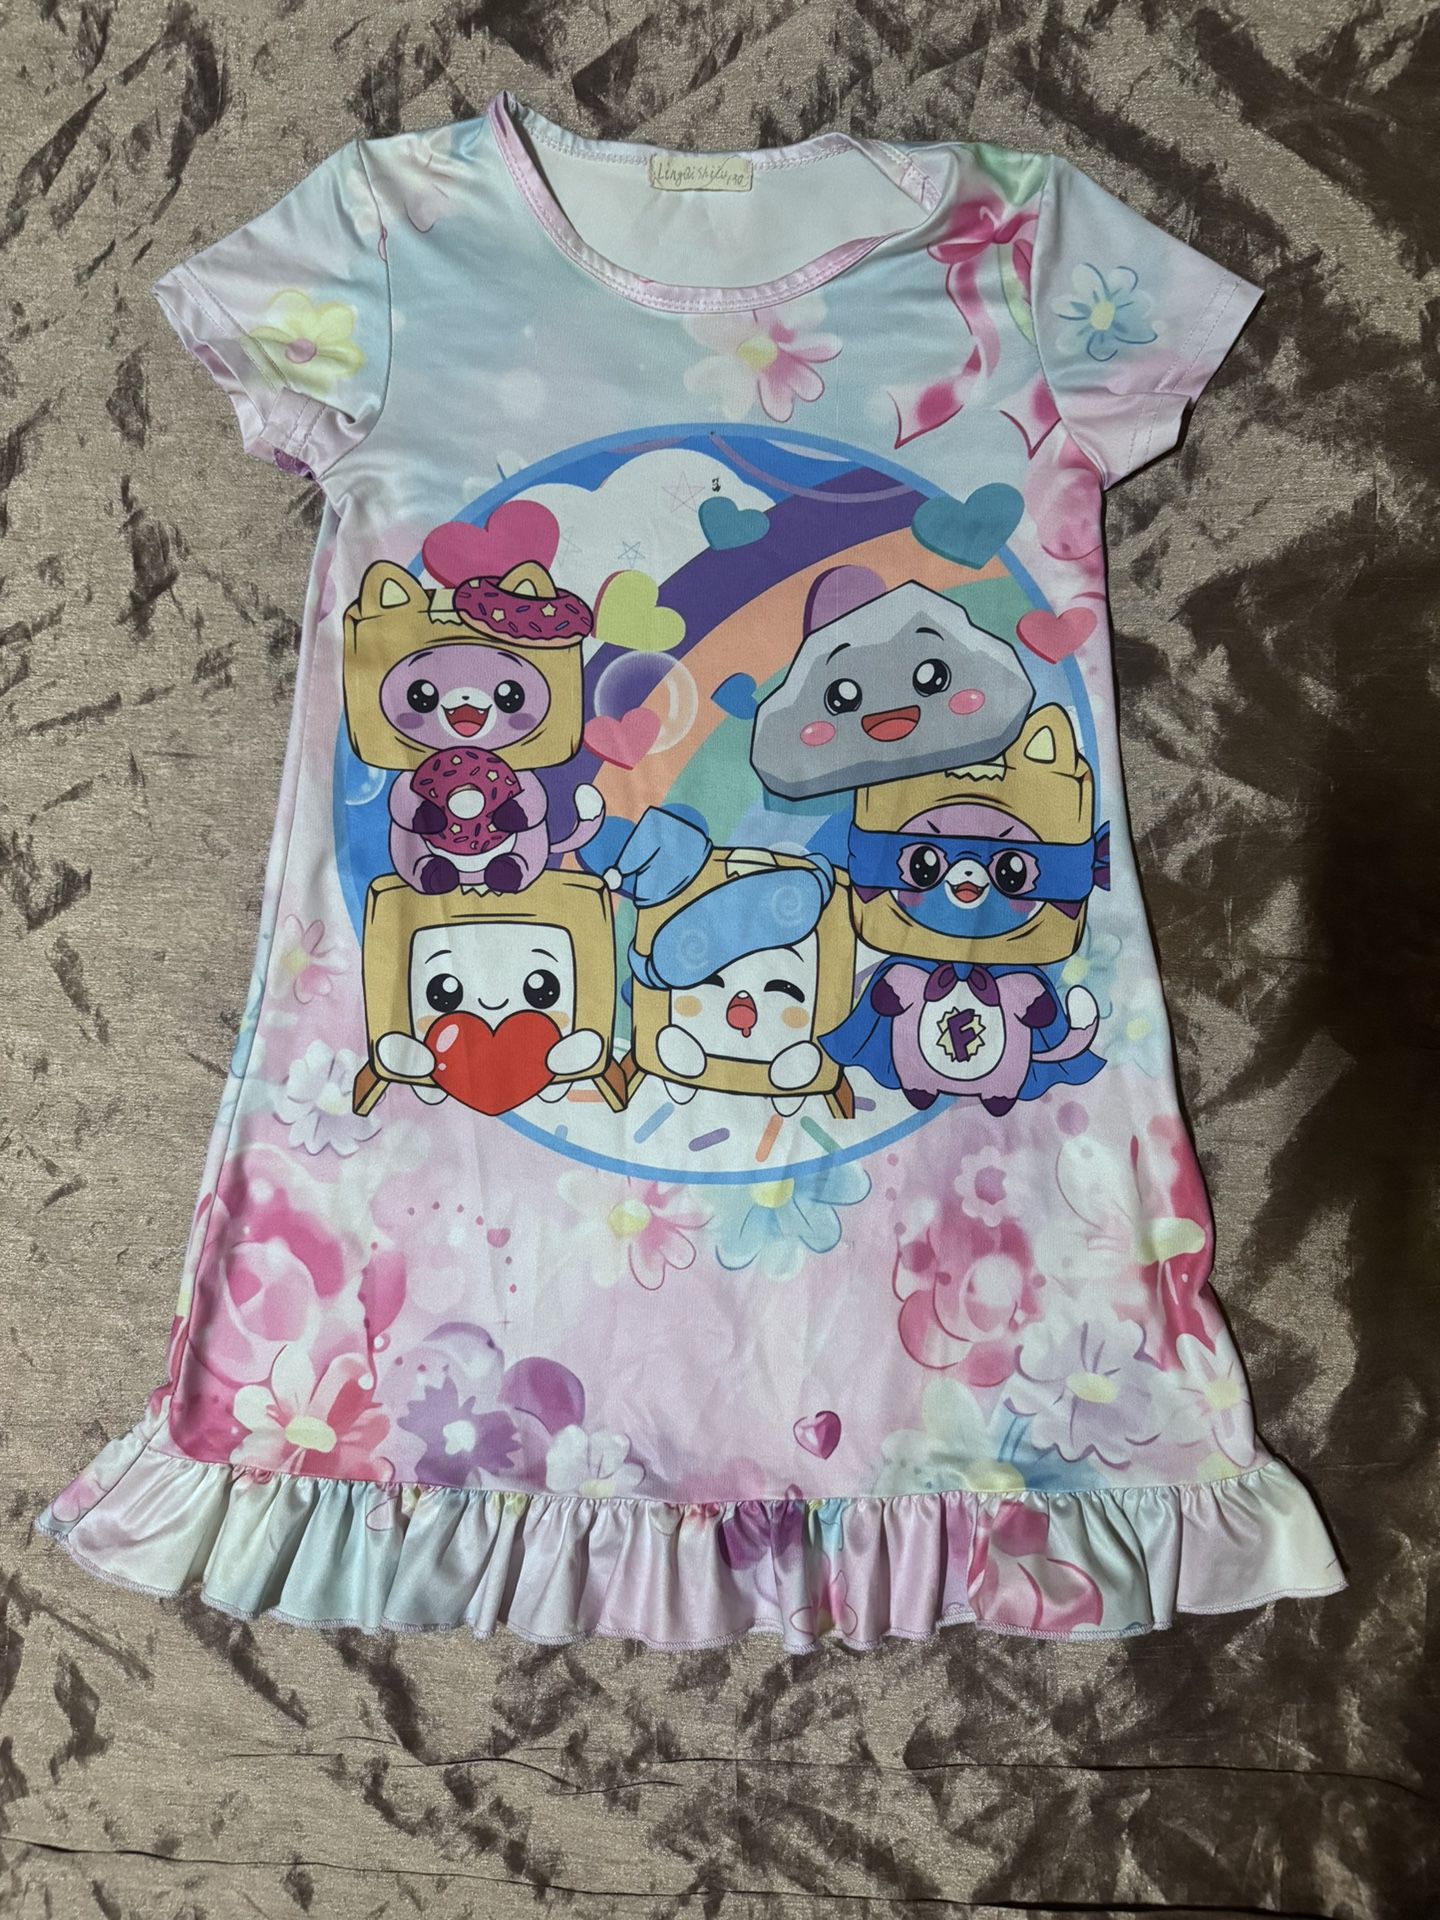 YouTube Lanky Box Girls size 6 Kids Nightgown Pajamas Sleepwear Dress Boxy Foxy